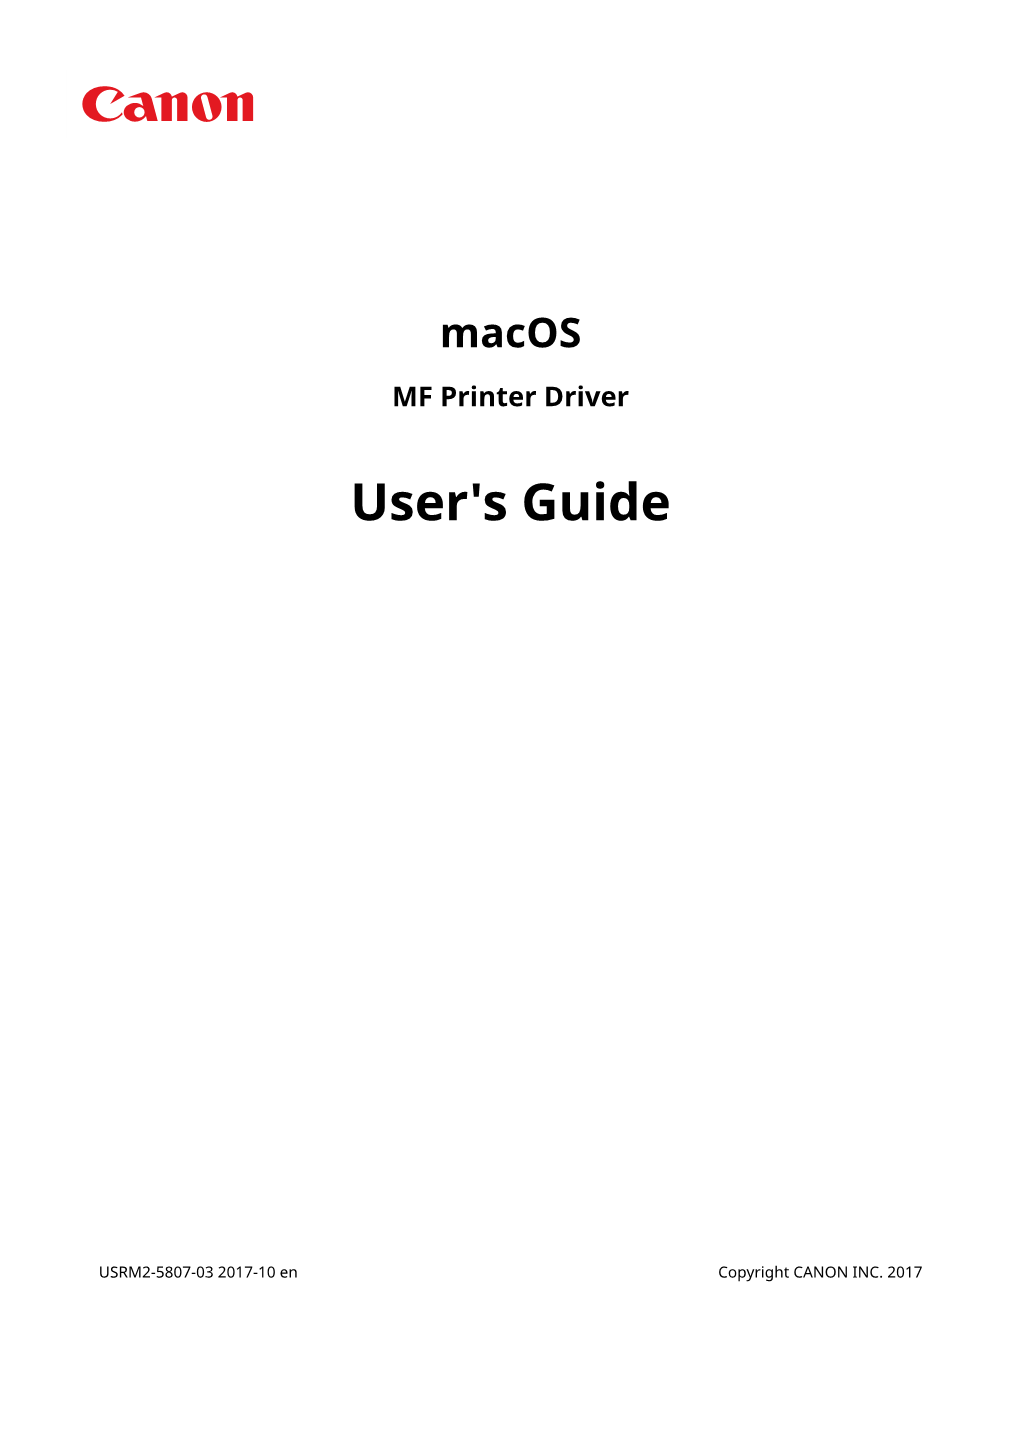 Macos MF Printer Driver User's Guide